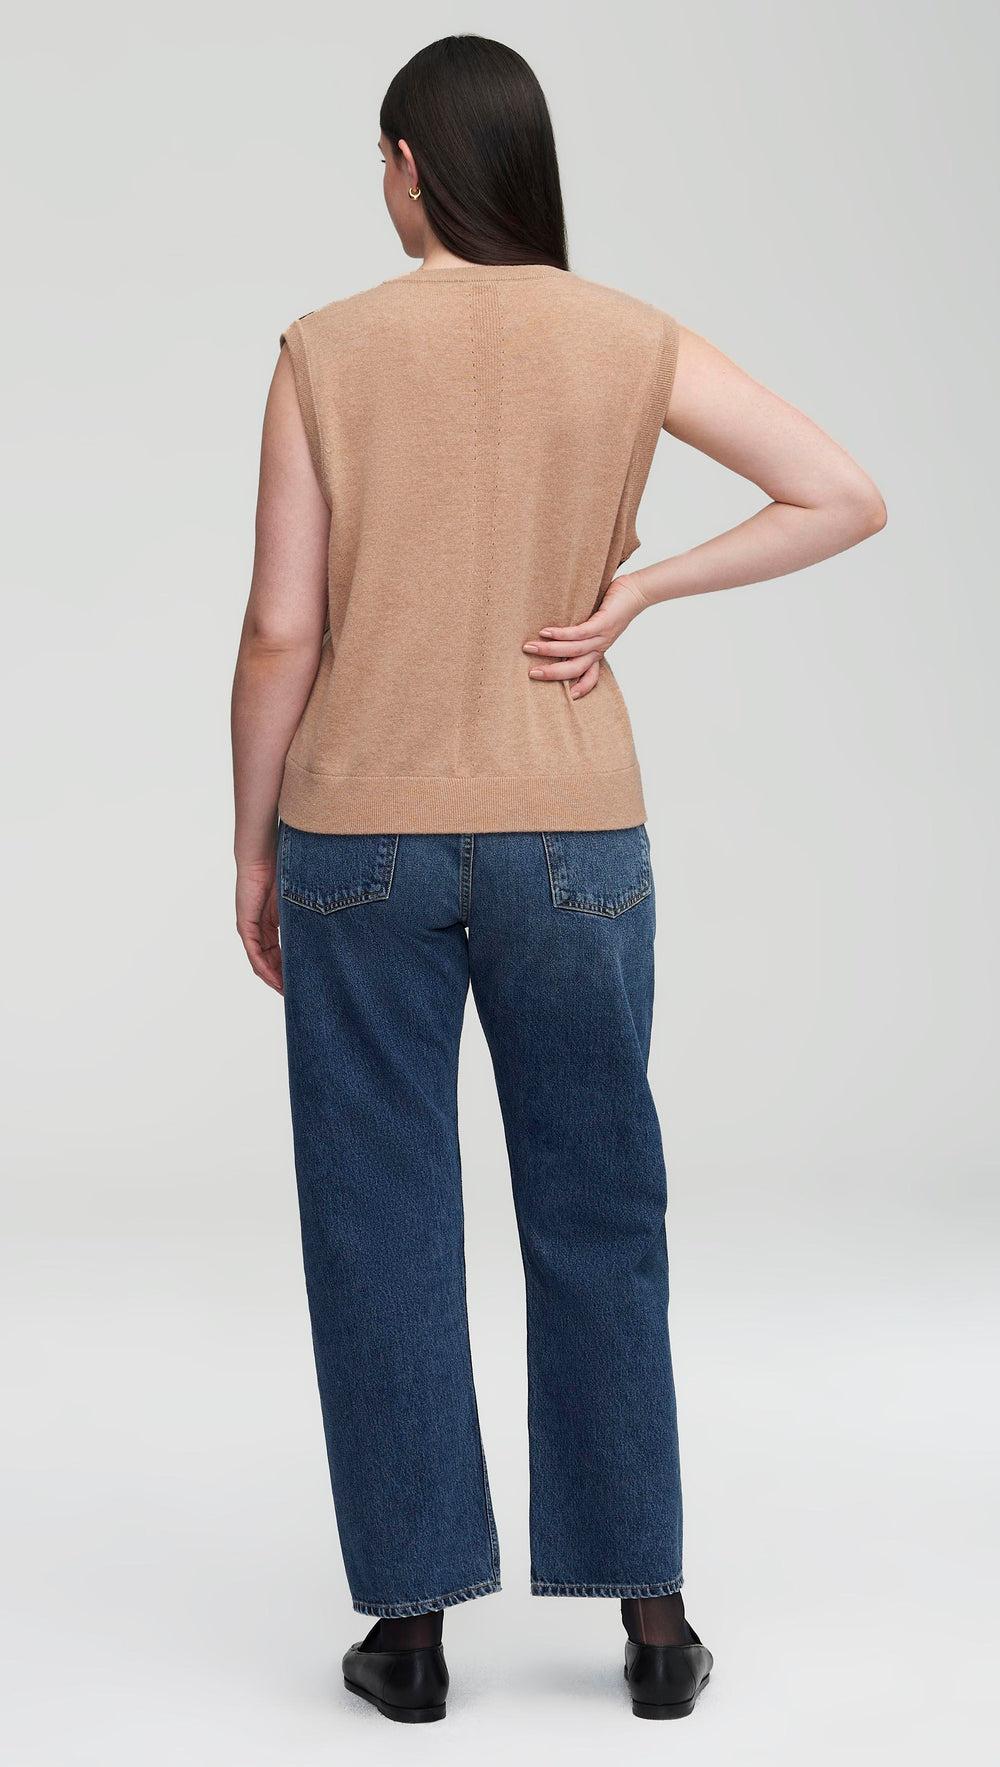 Argyle Vest in Wool-Cashmere | Women's Sweaters | Argent